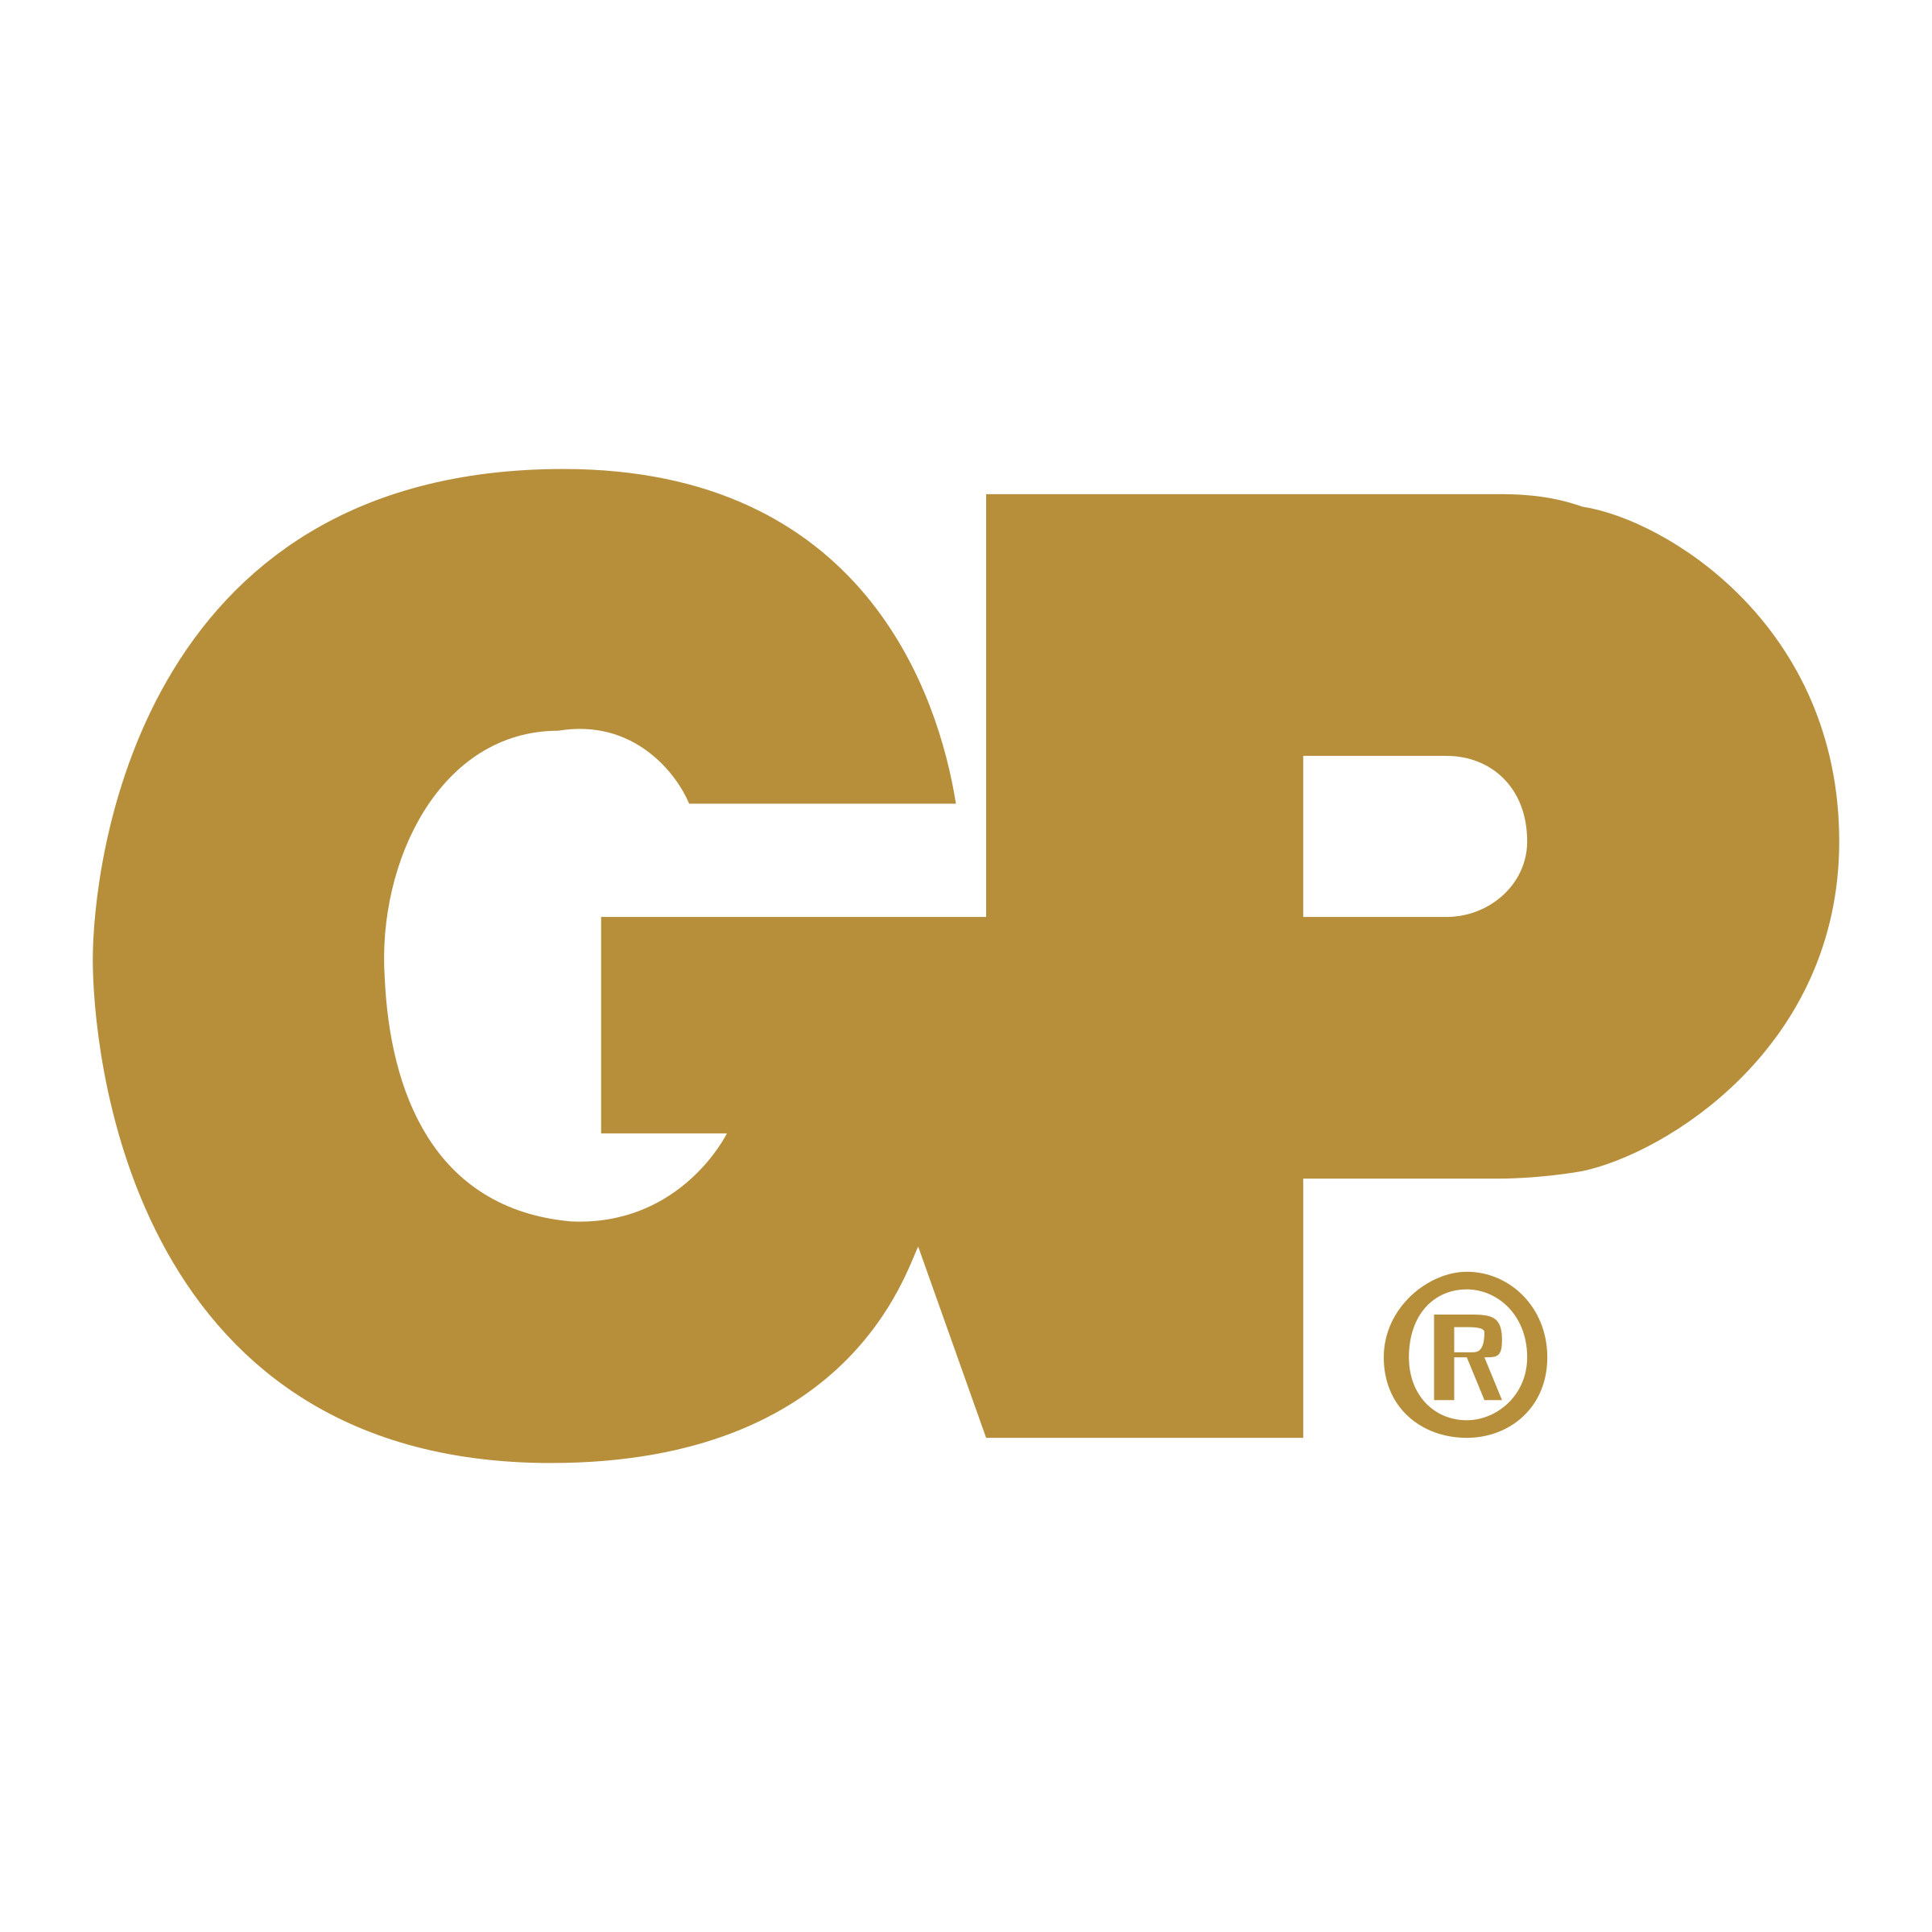 GP Logo - GP Logo PNG Transparent & SVG Vector - Freebie Supply